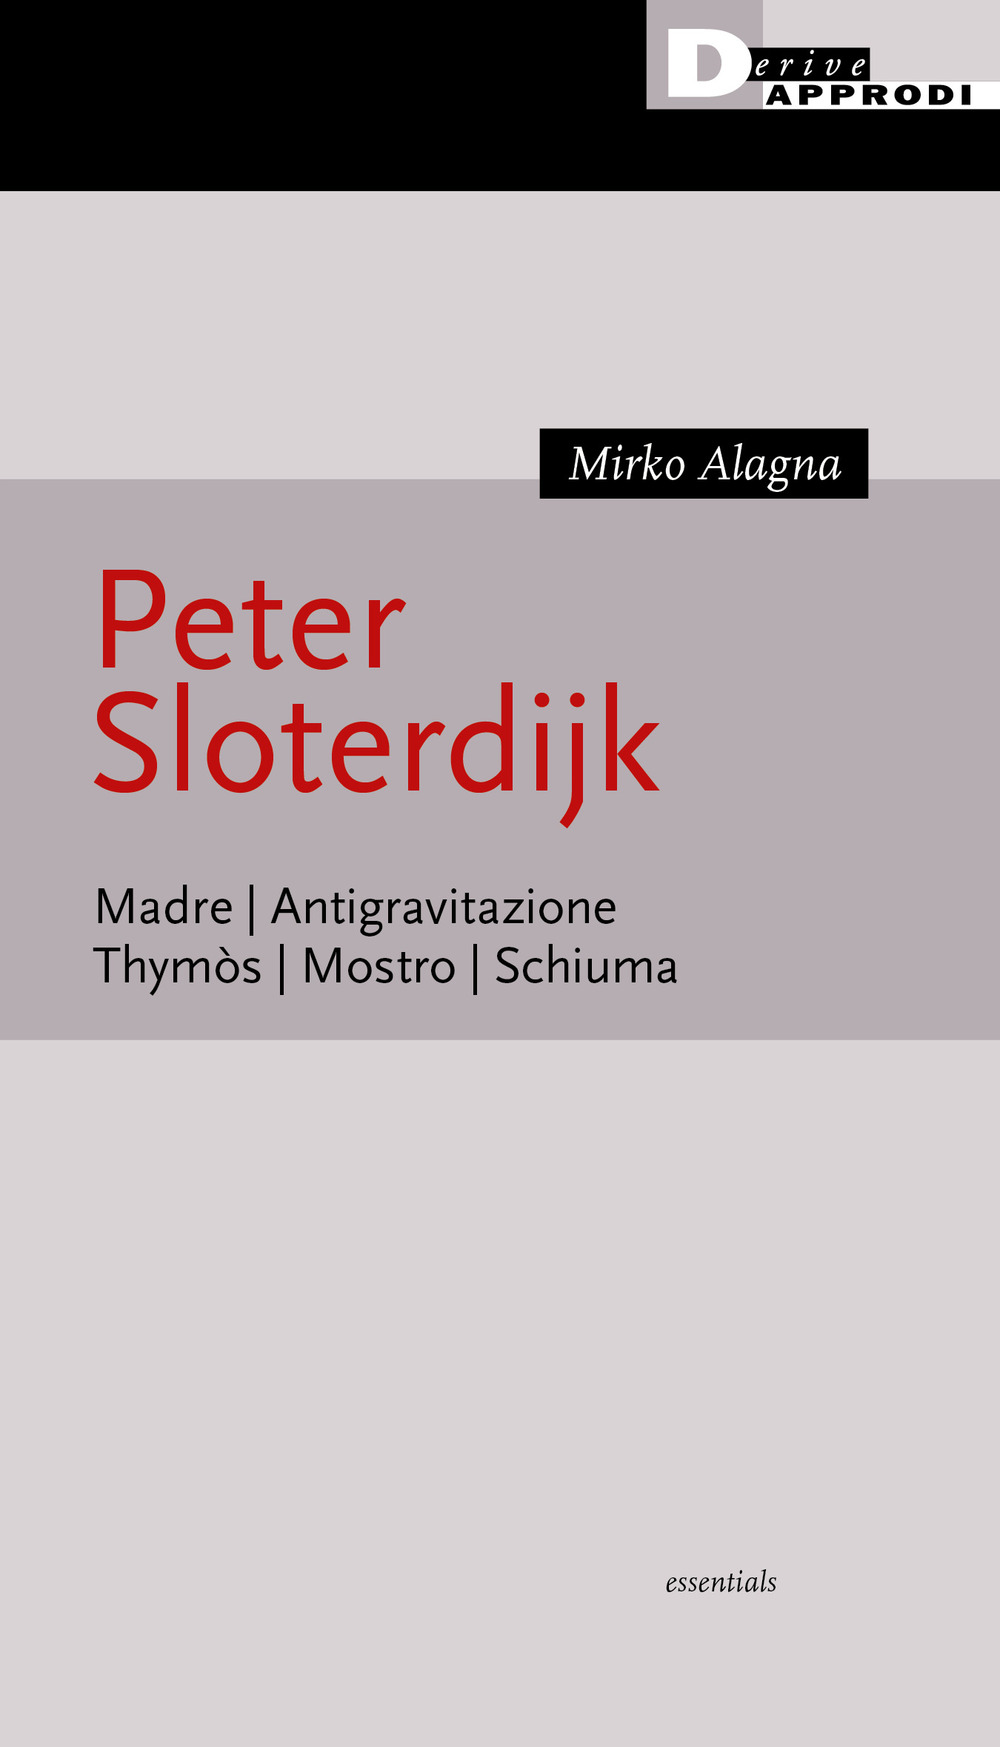 PETER SLOTERDIJK. IN 5 CONCETTI - Alagna Mirko - 9788865484029